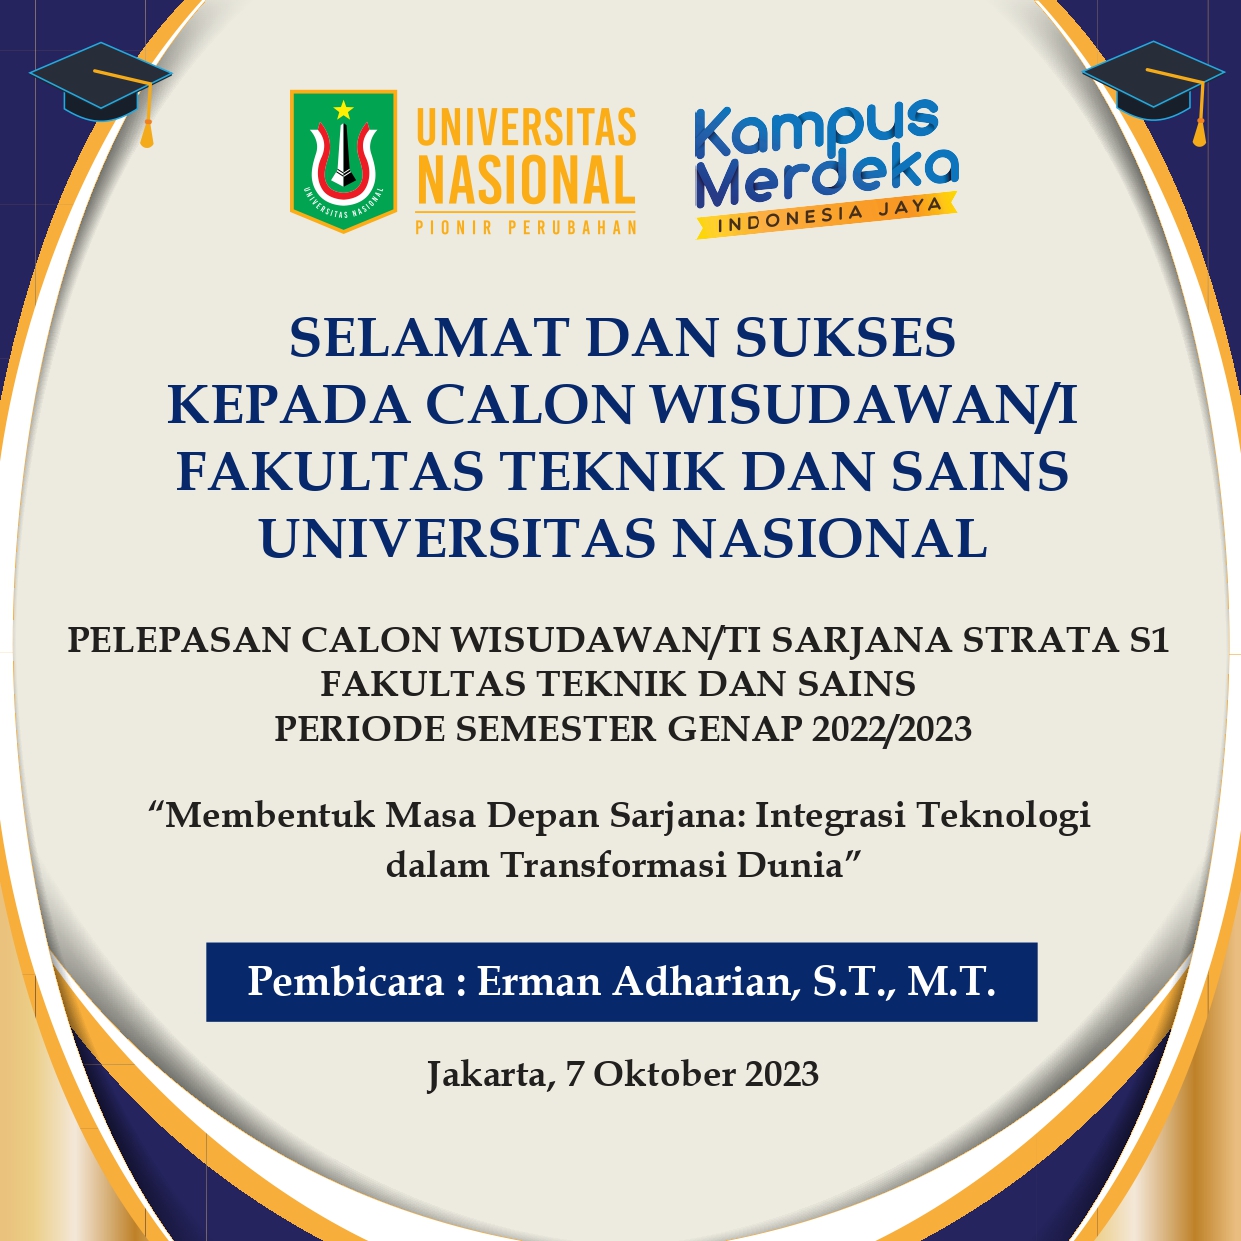 Pelepasan Wisudawan/ti Sarjana Fakultas Teknik dan Sains